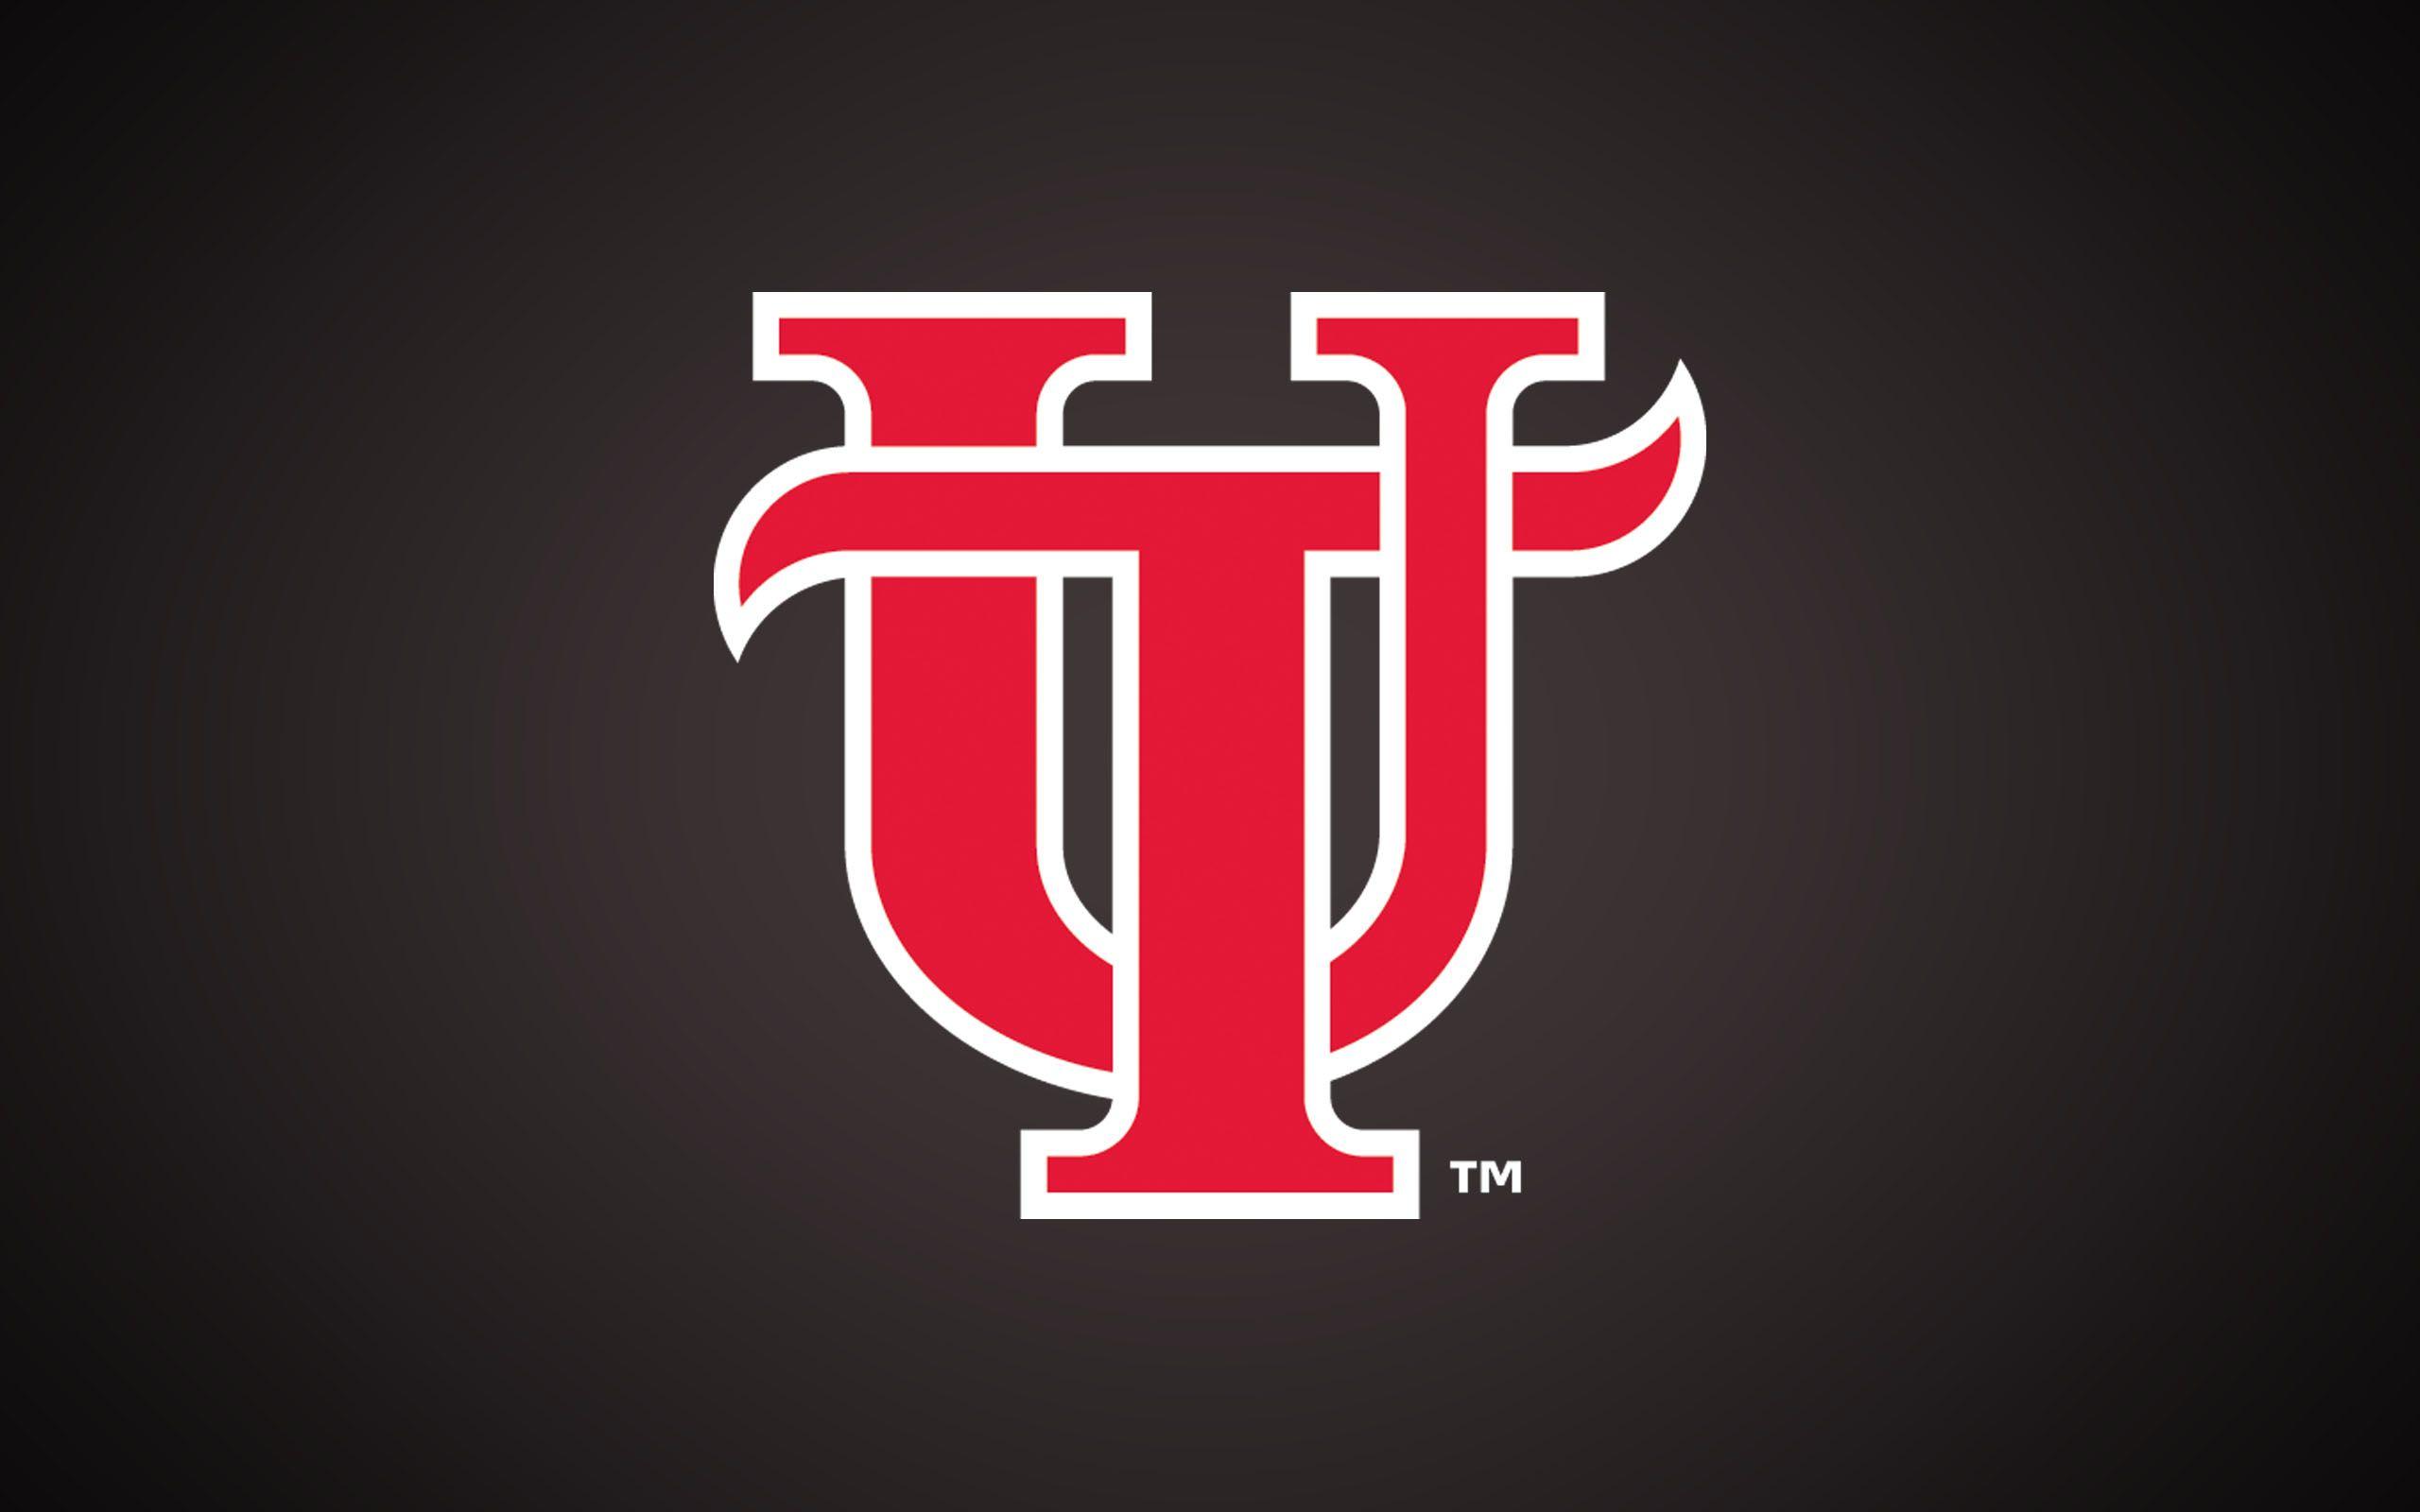 University of Tampa Logo - The University of Tampa - Public Information - Wallpaper Downloads